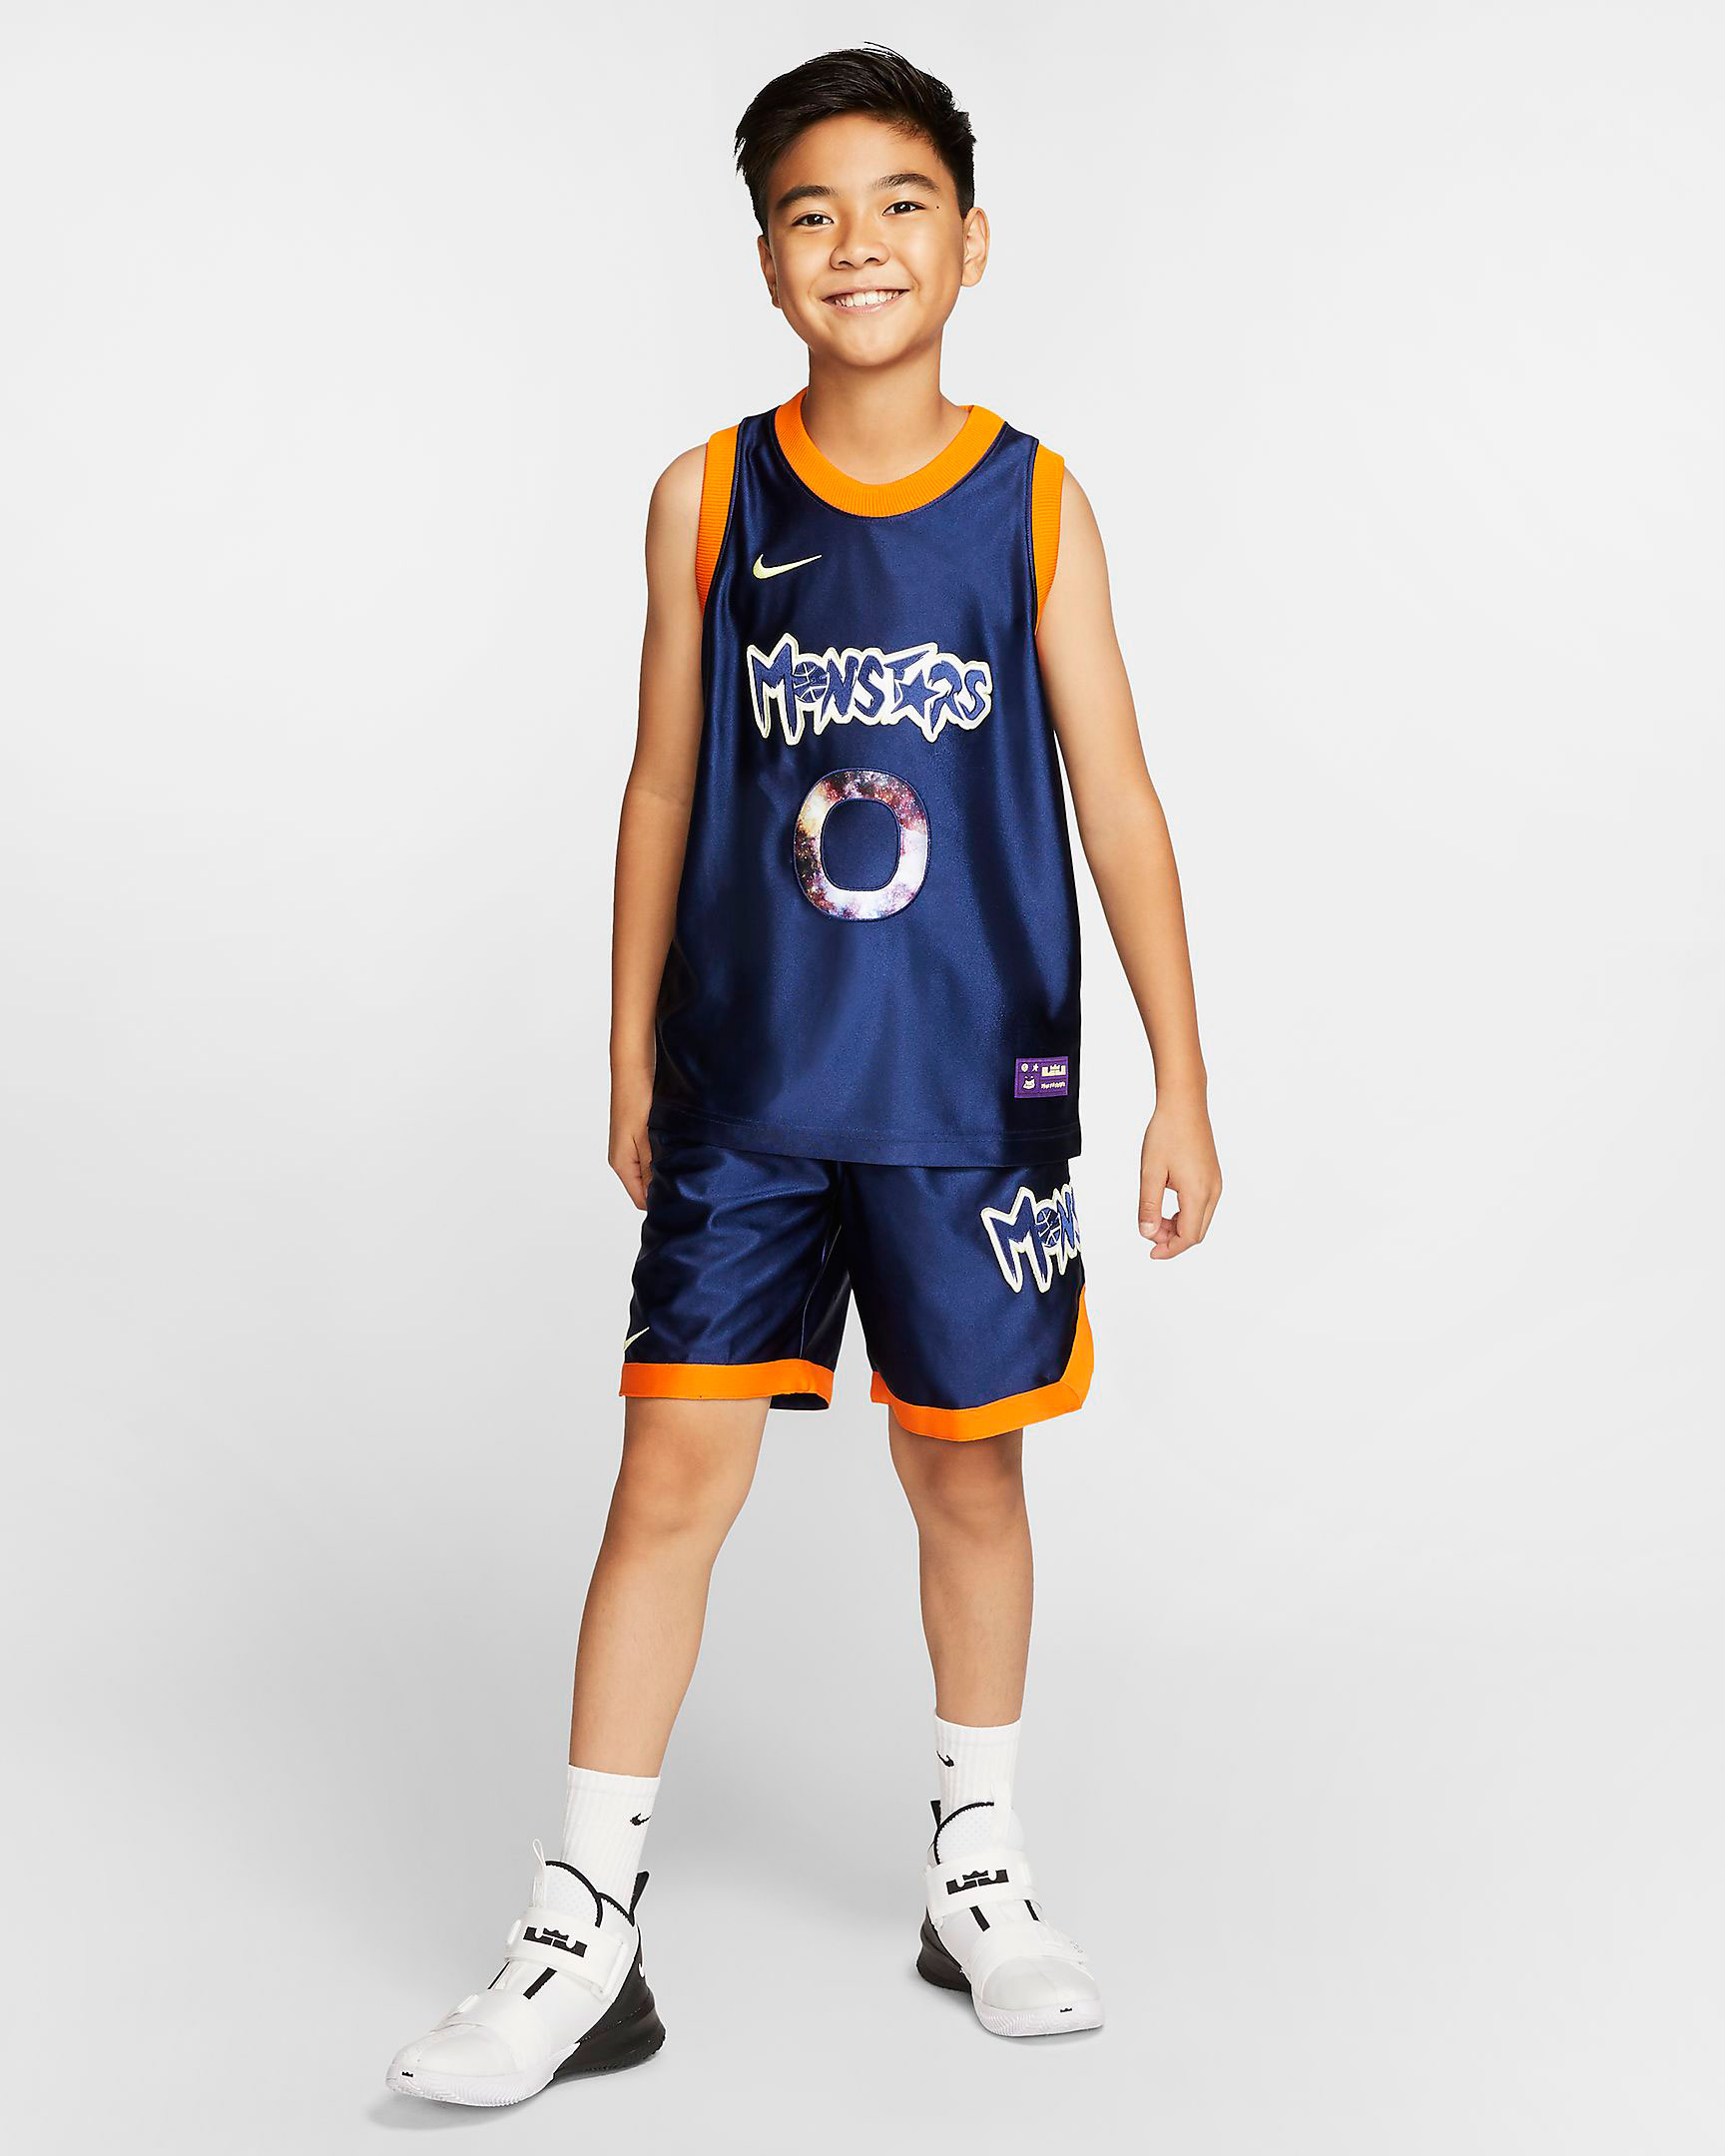 Nike LeBron Monstars Tune Squad Jerseys and Shorts for Kids ...